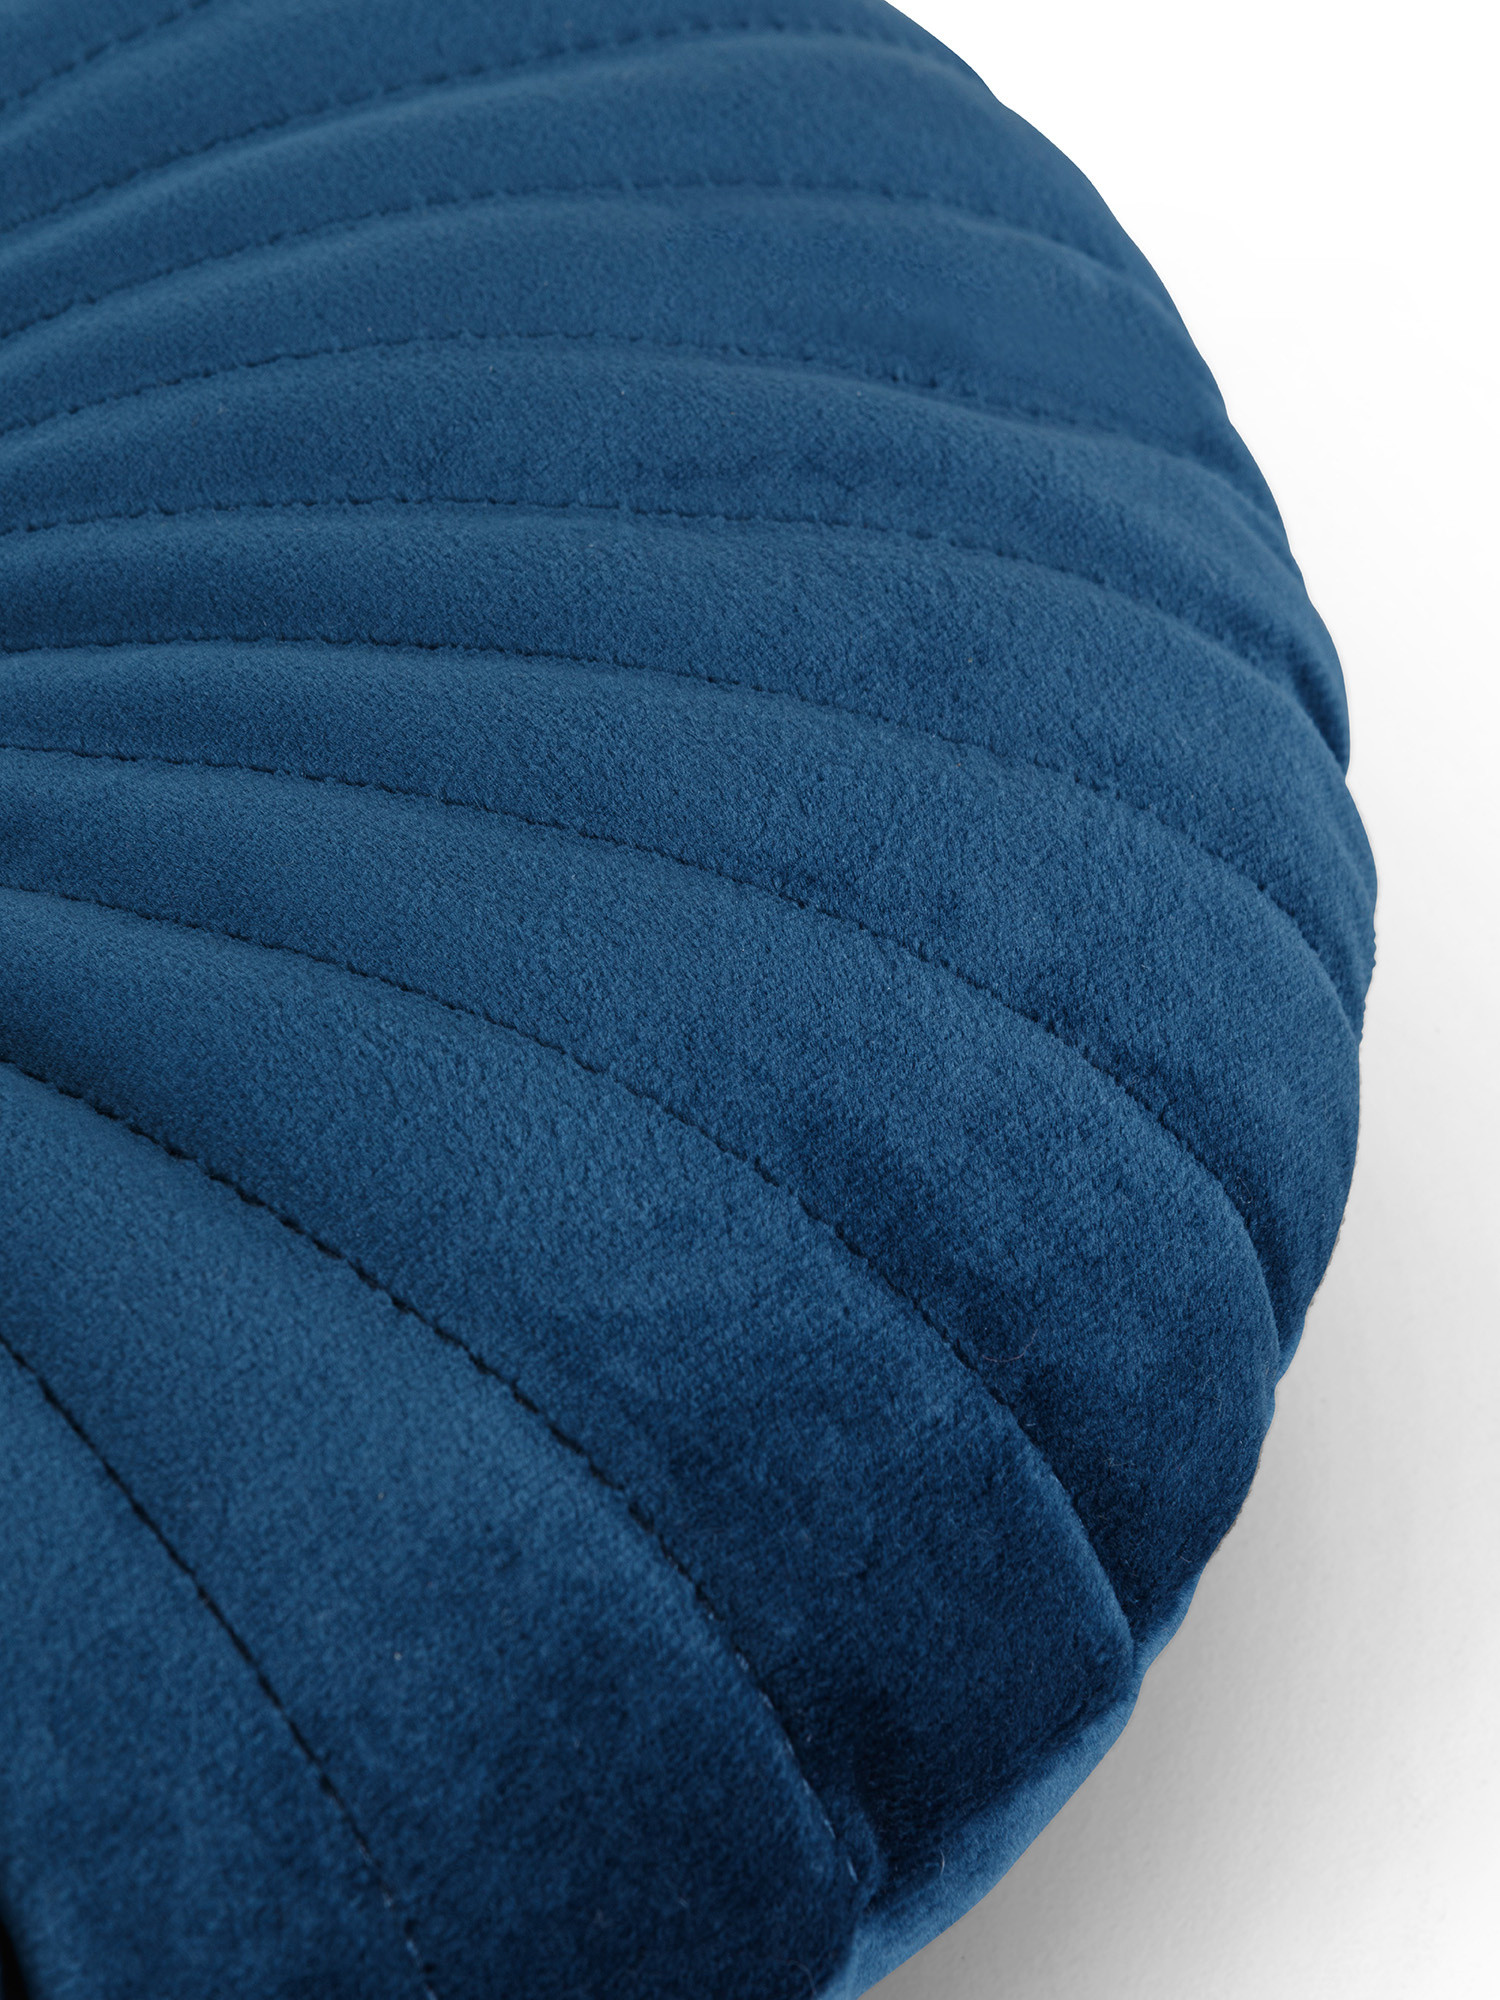 Cuscino rotondo in velluto, Blu scuro, large image number 2